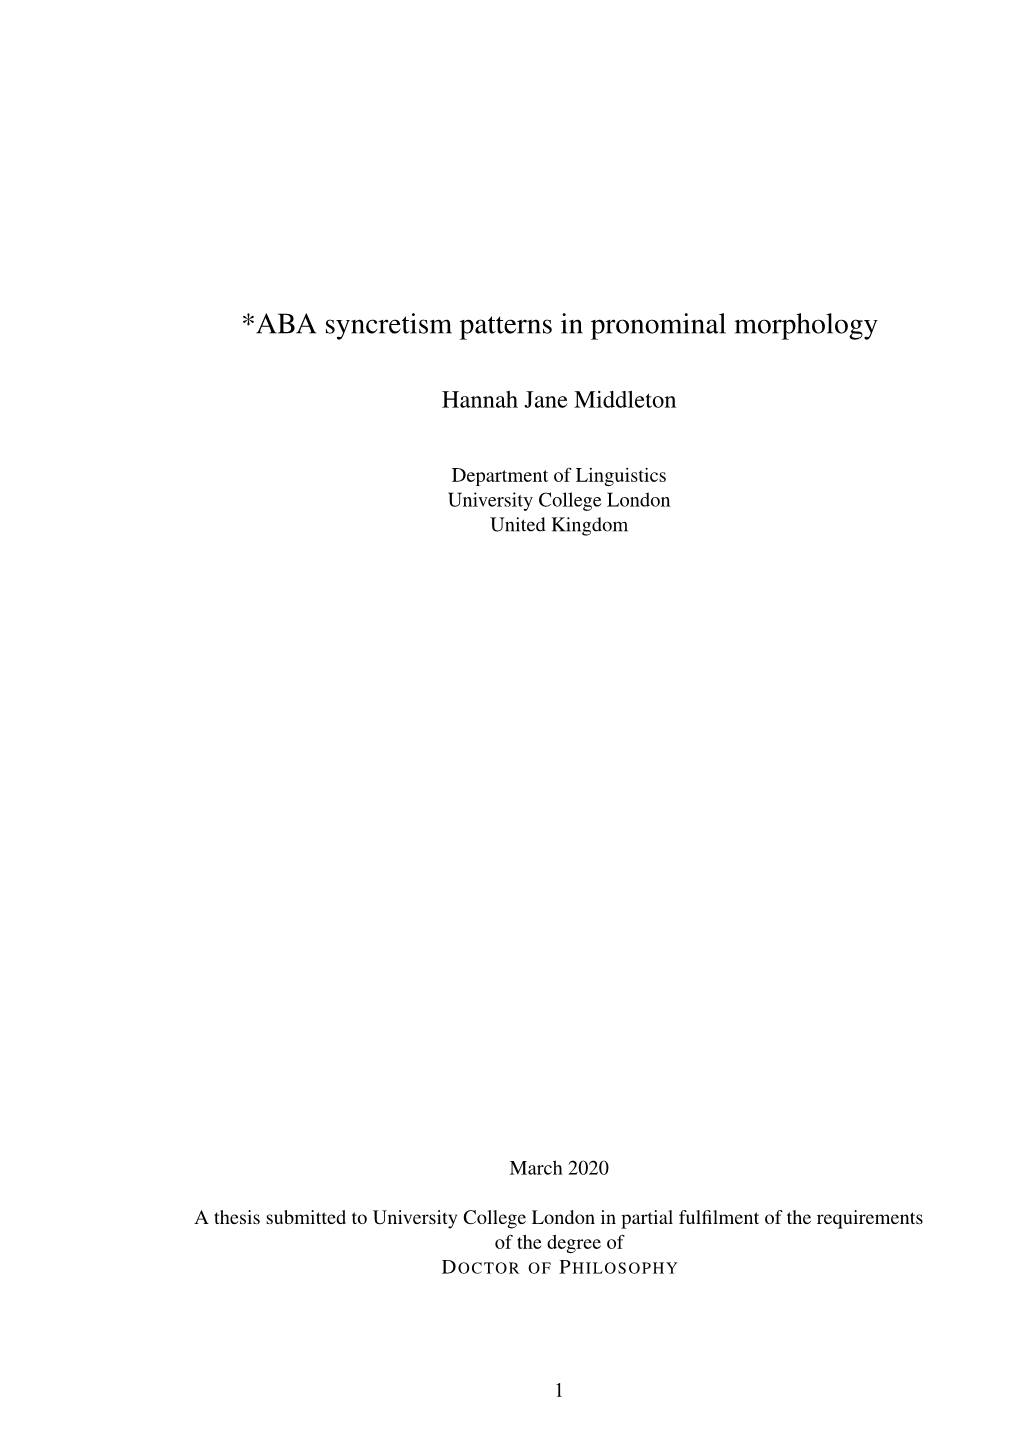 *ABA Syncretism Patterns in Pronominal Morphology